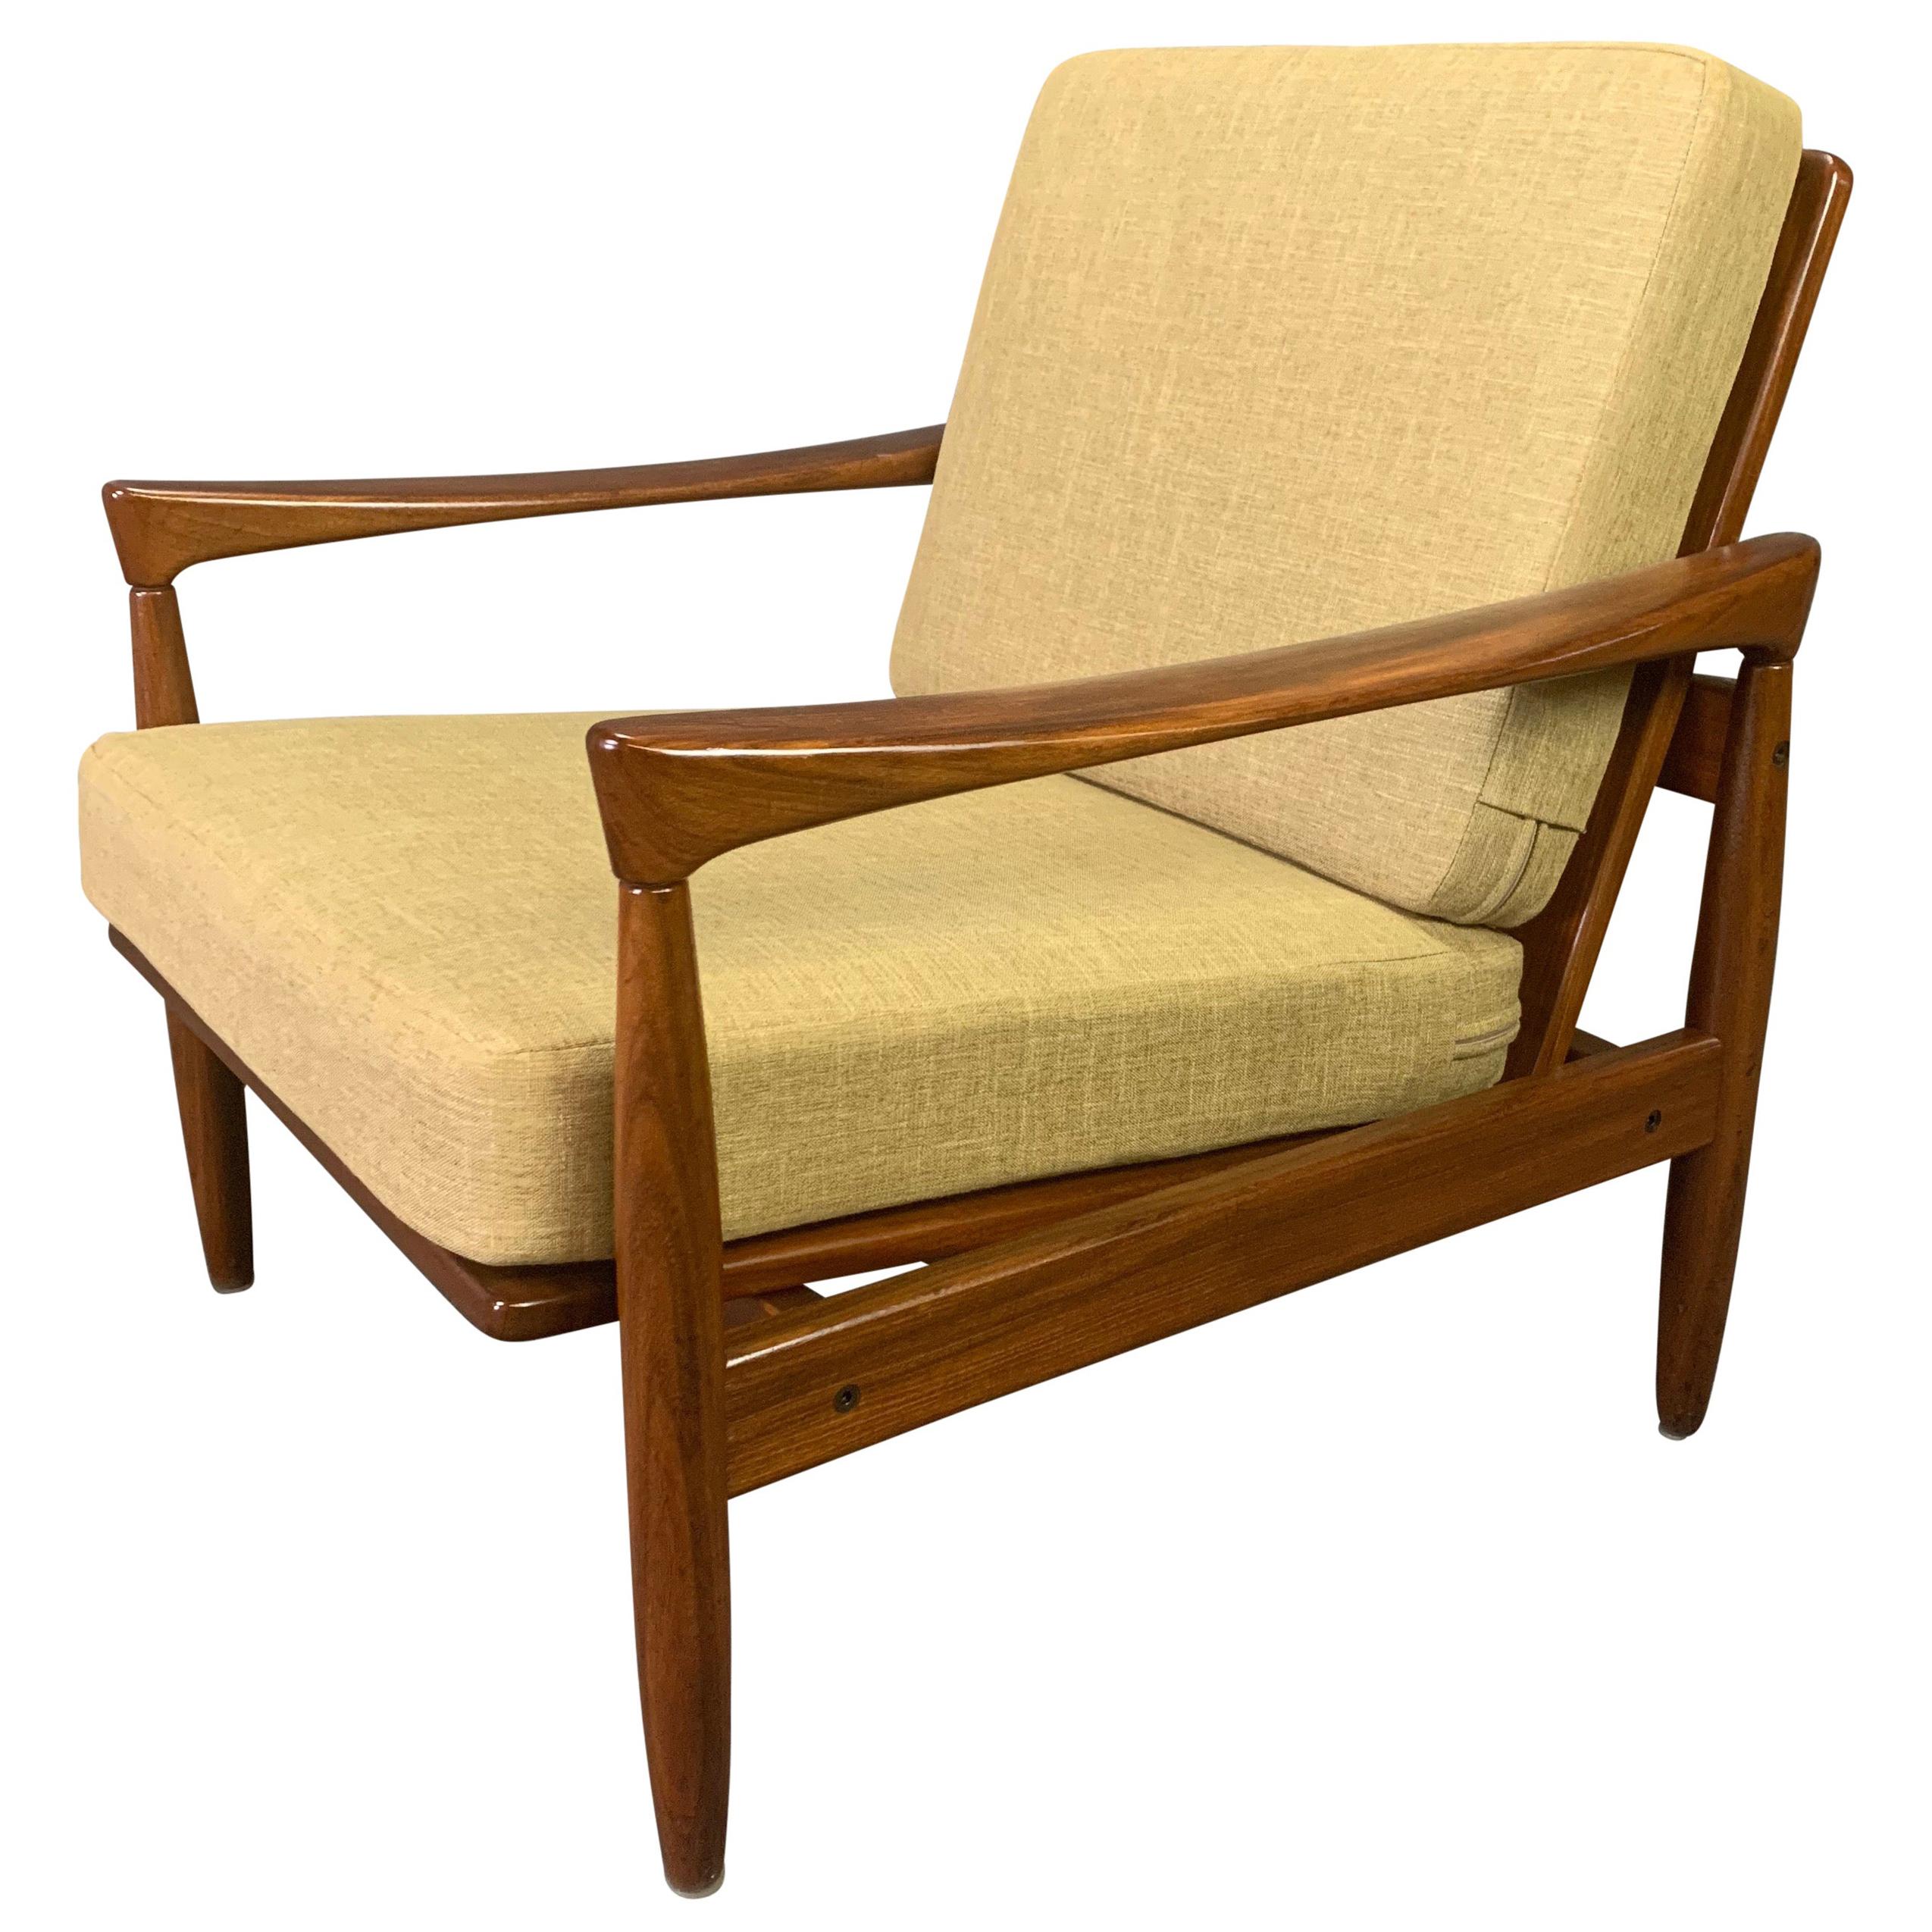 Here is a Beautiful Modern Lounge Chair Model "Kolding" Designed by Erik Wortz